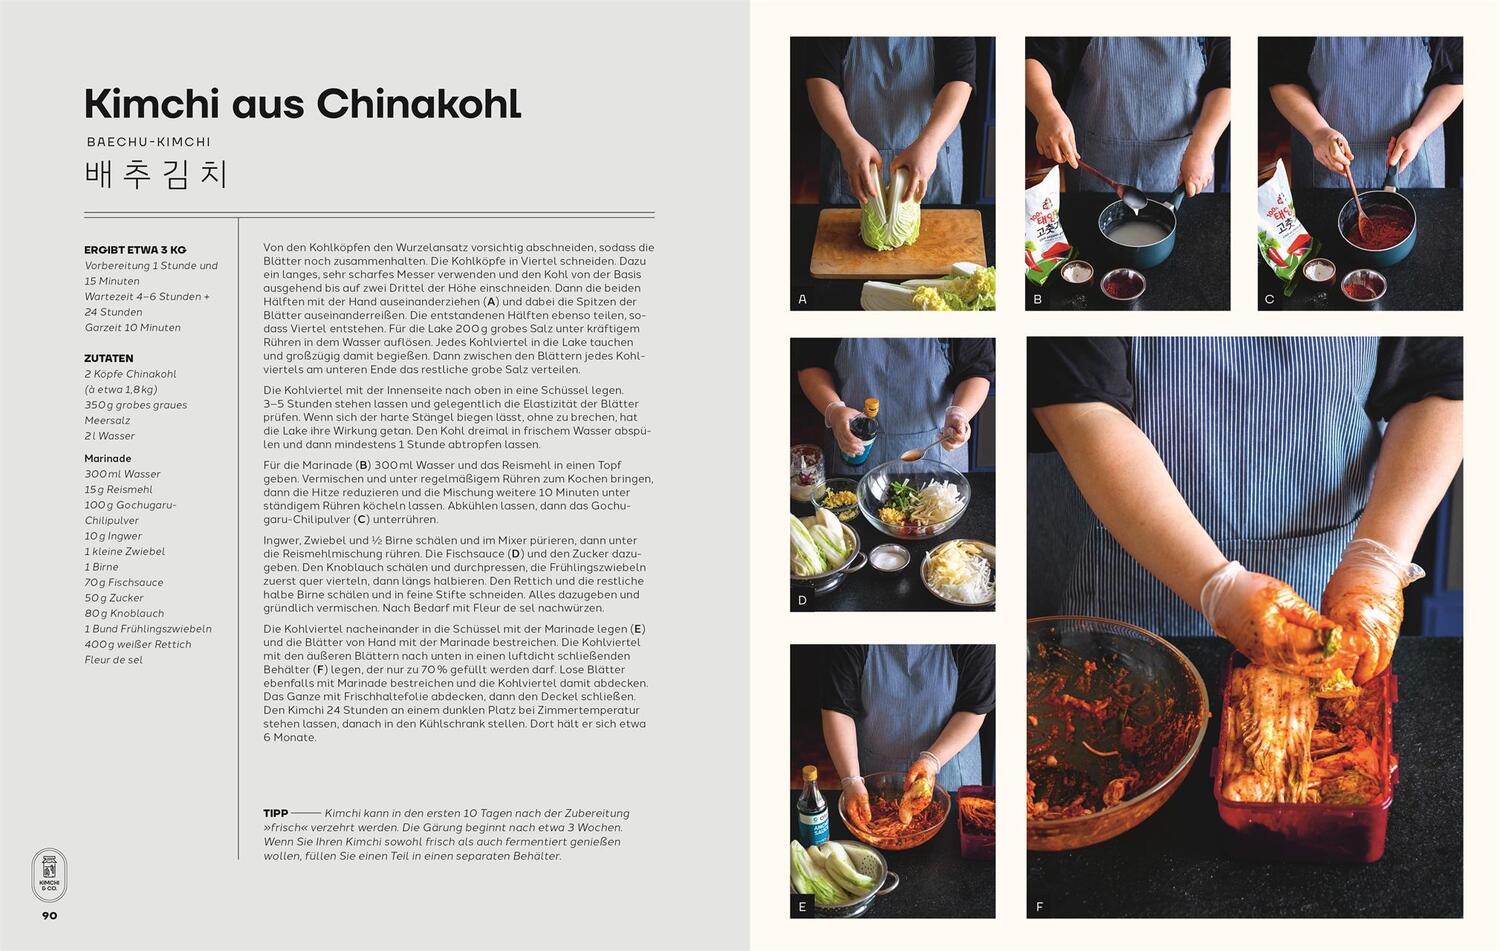 Bild: 9783831047888 | Koreanische Küche | 100 Rezepte für Bibimbap, Kimchi &amp; Co. | Jina Jung